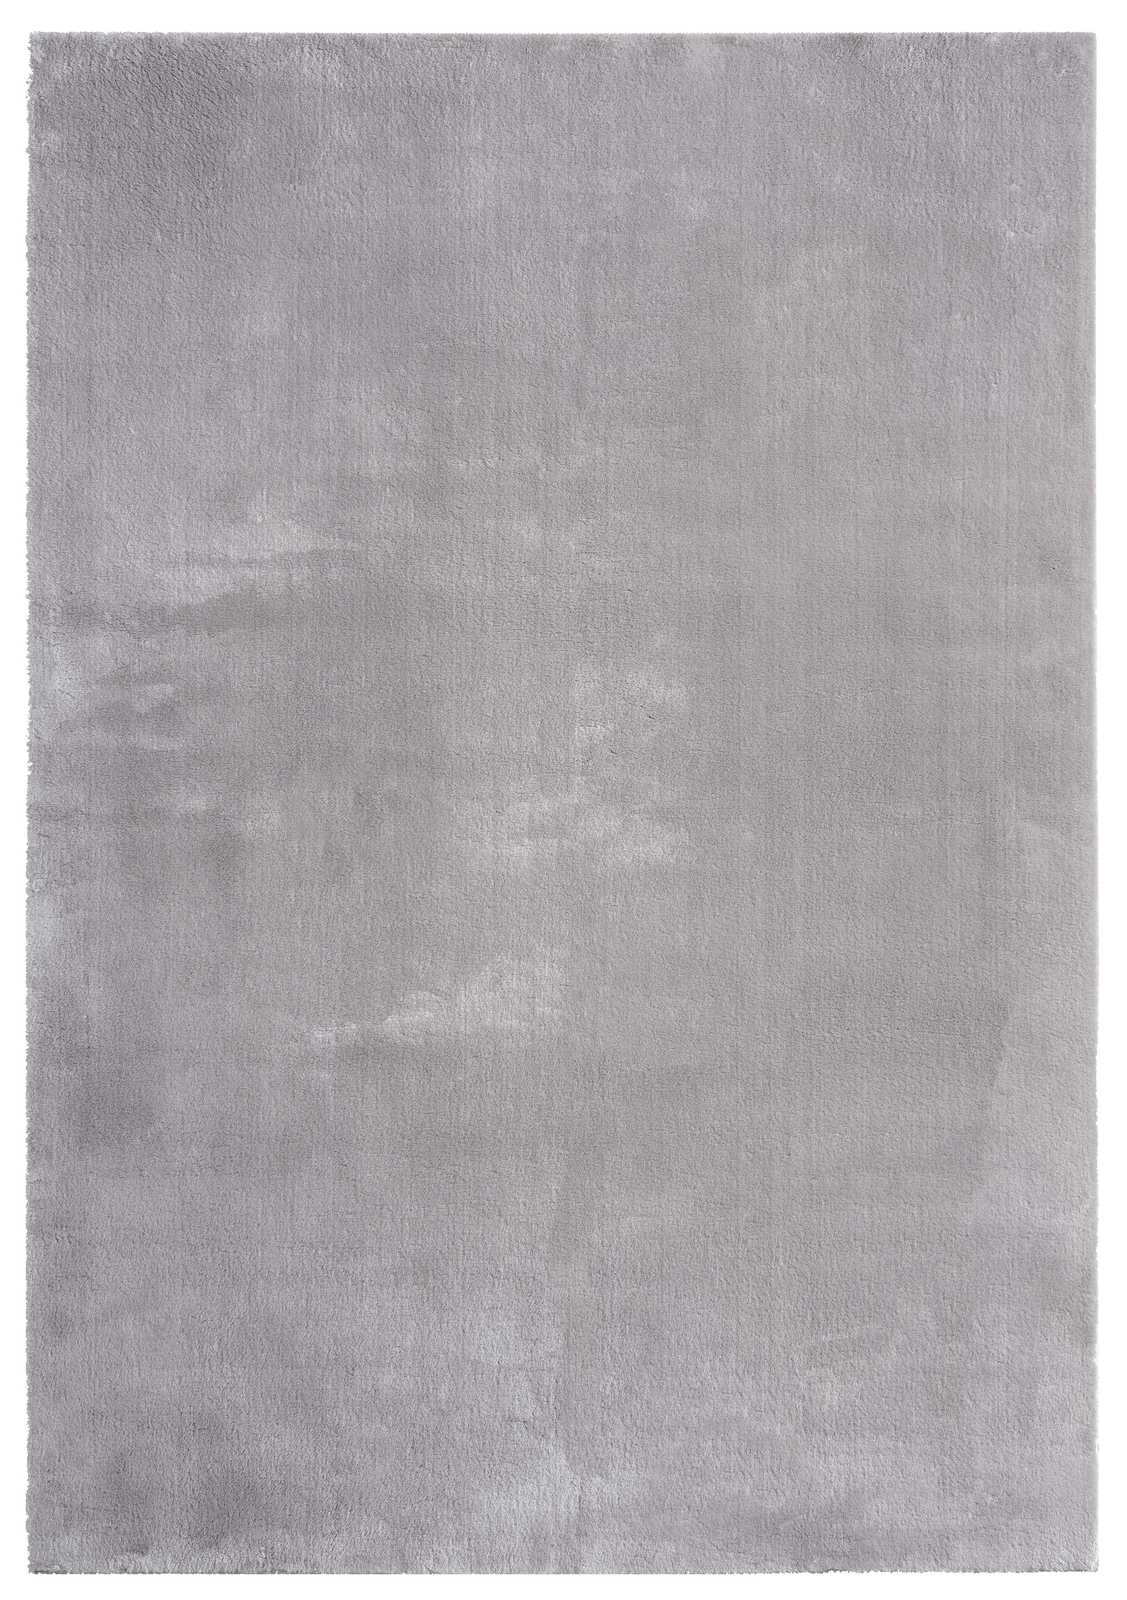             Feiner Hochflor Teppich in Grau – 150 x 80 cm
        